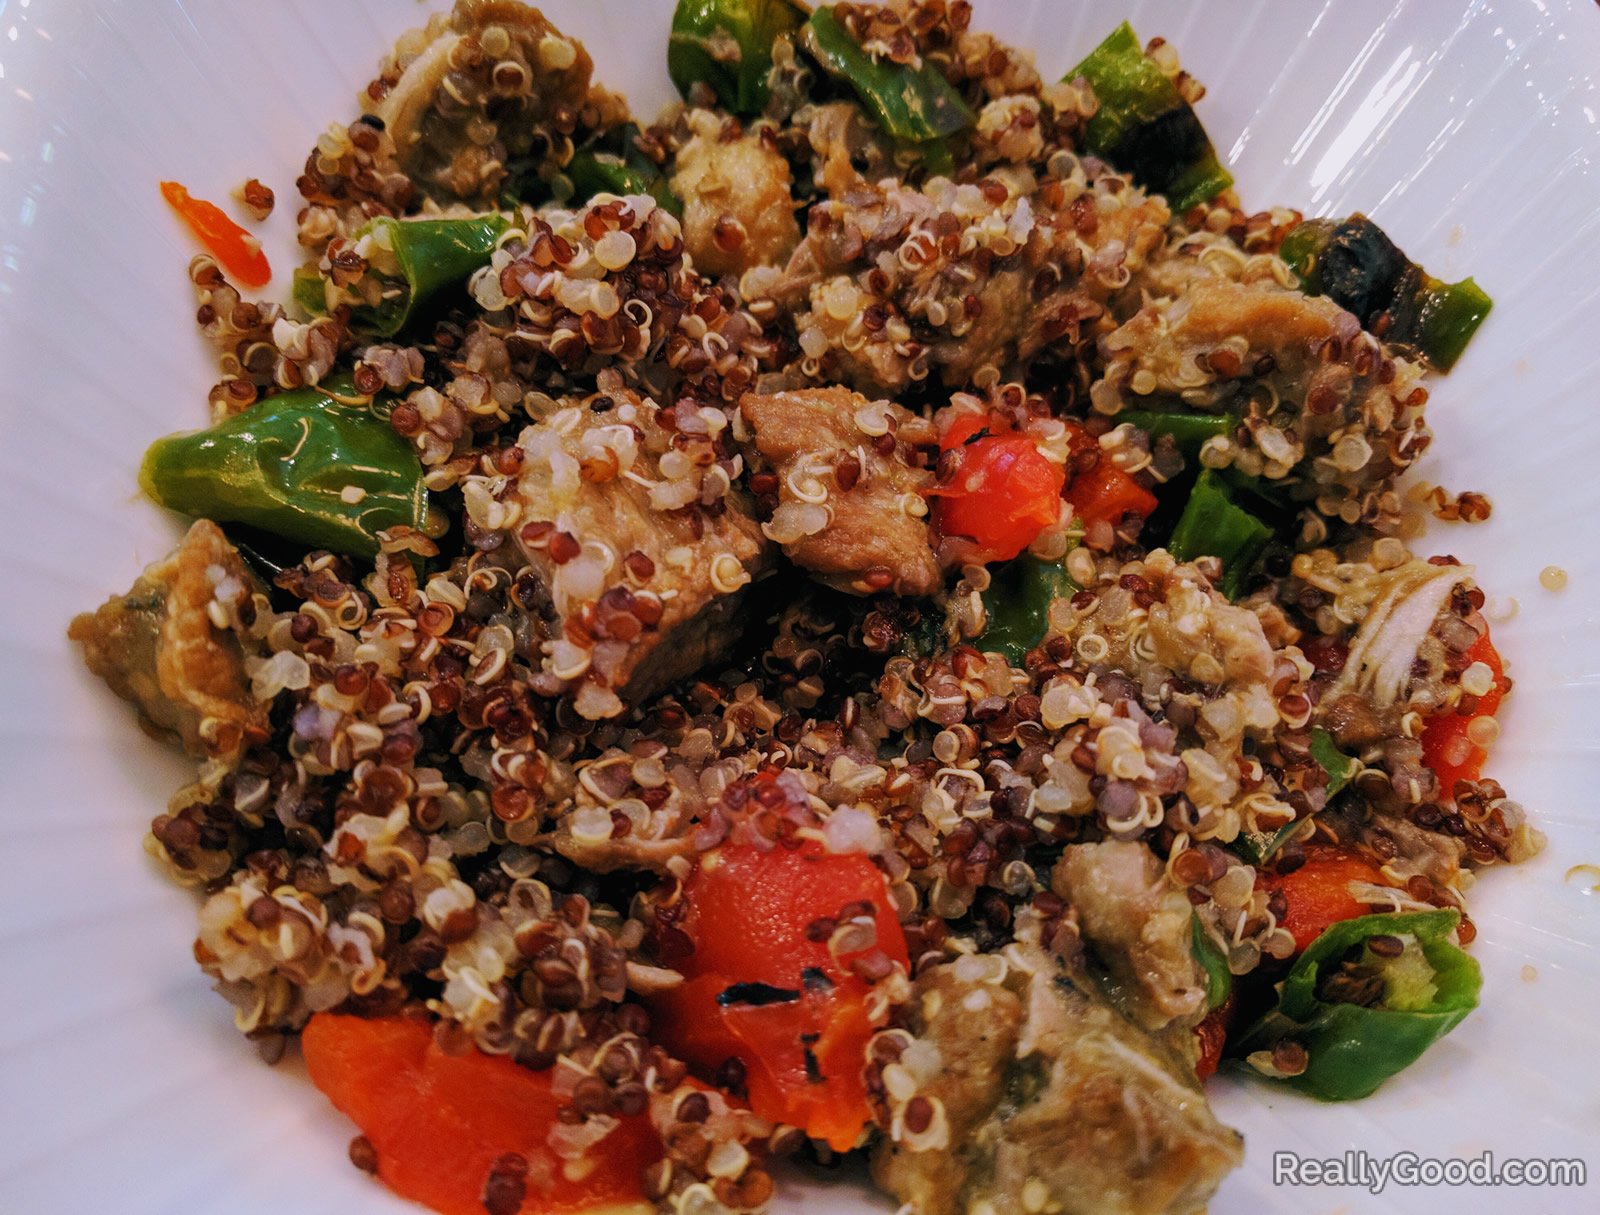 Quinoa with roasted veggies